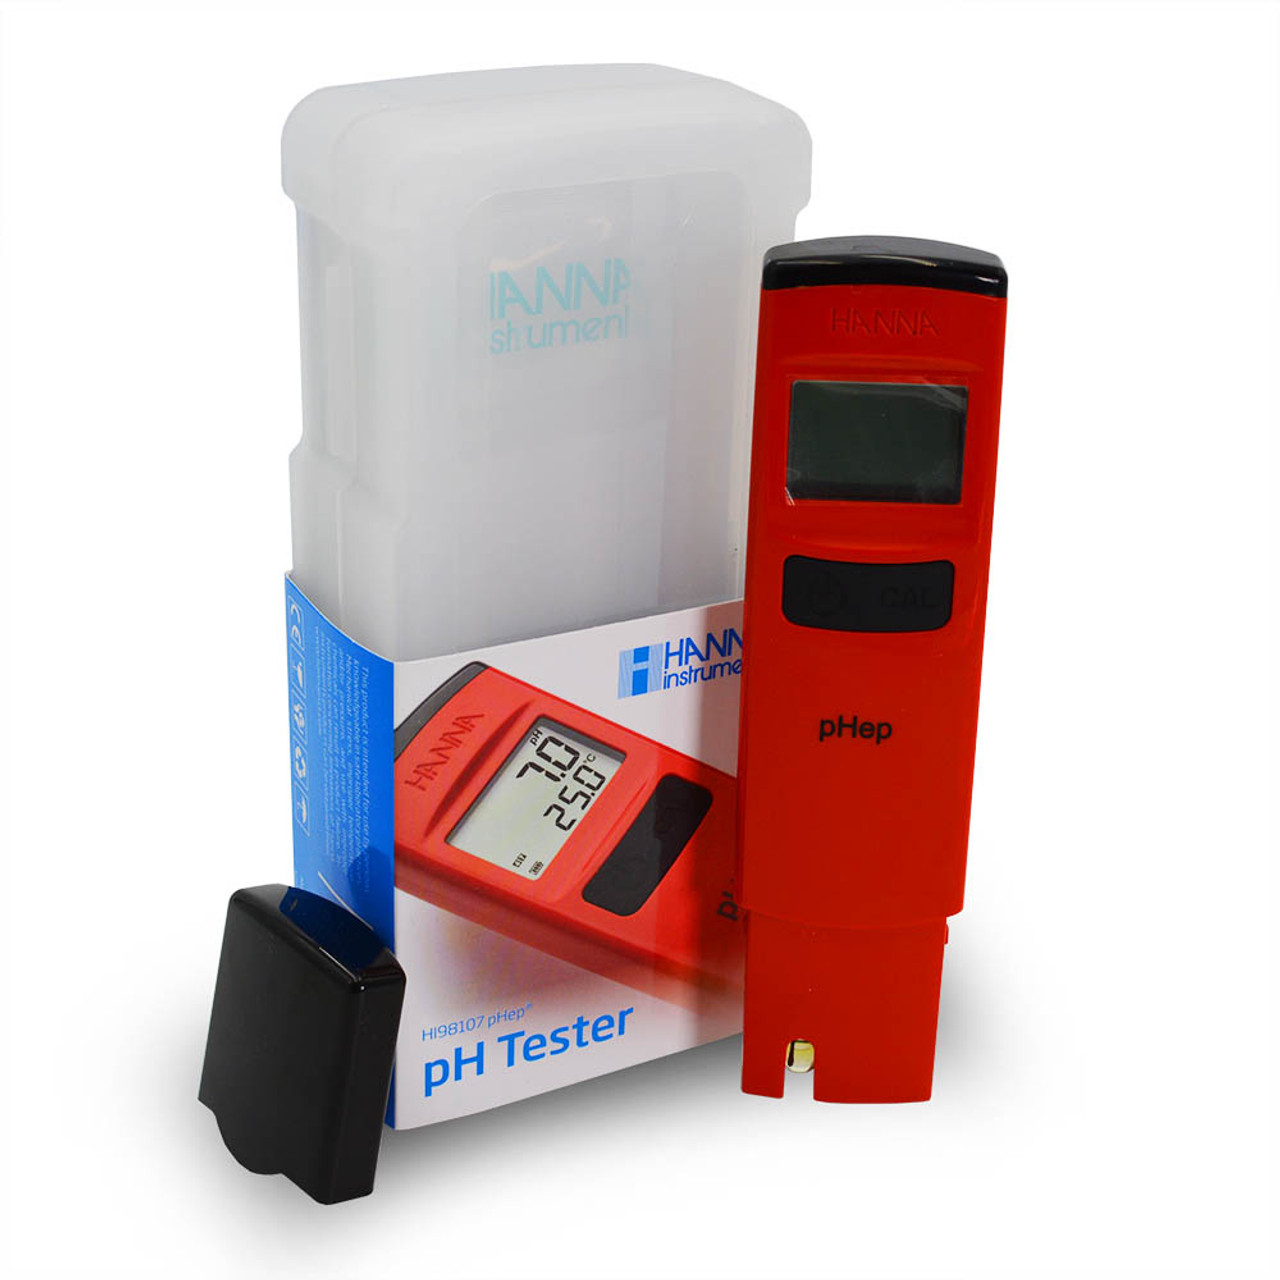 (HI98107) Instruments pH Pocket Hanna 0.1 Resolution Waterproof Tester - pHep® with -